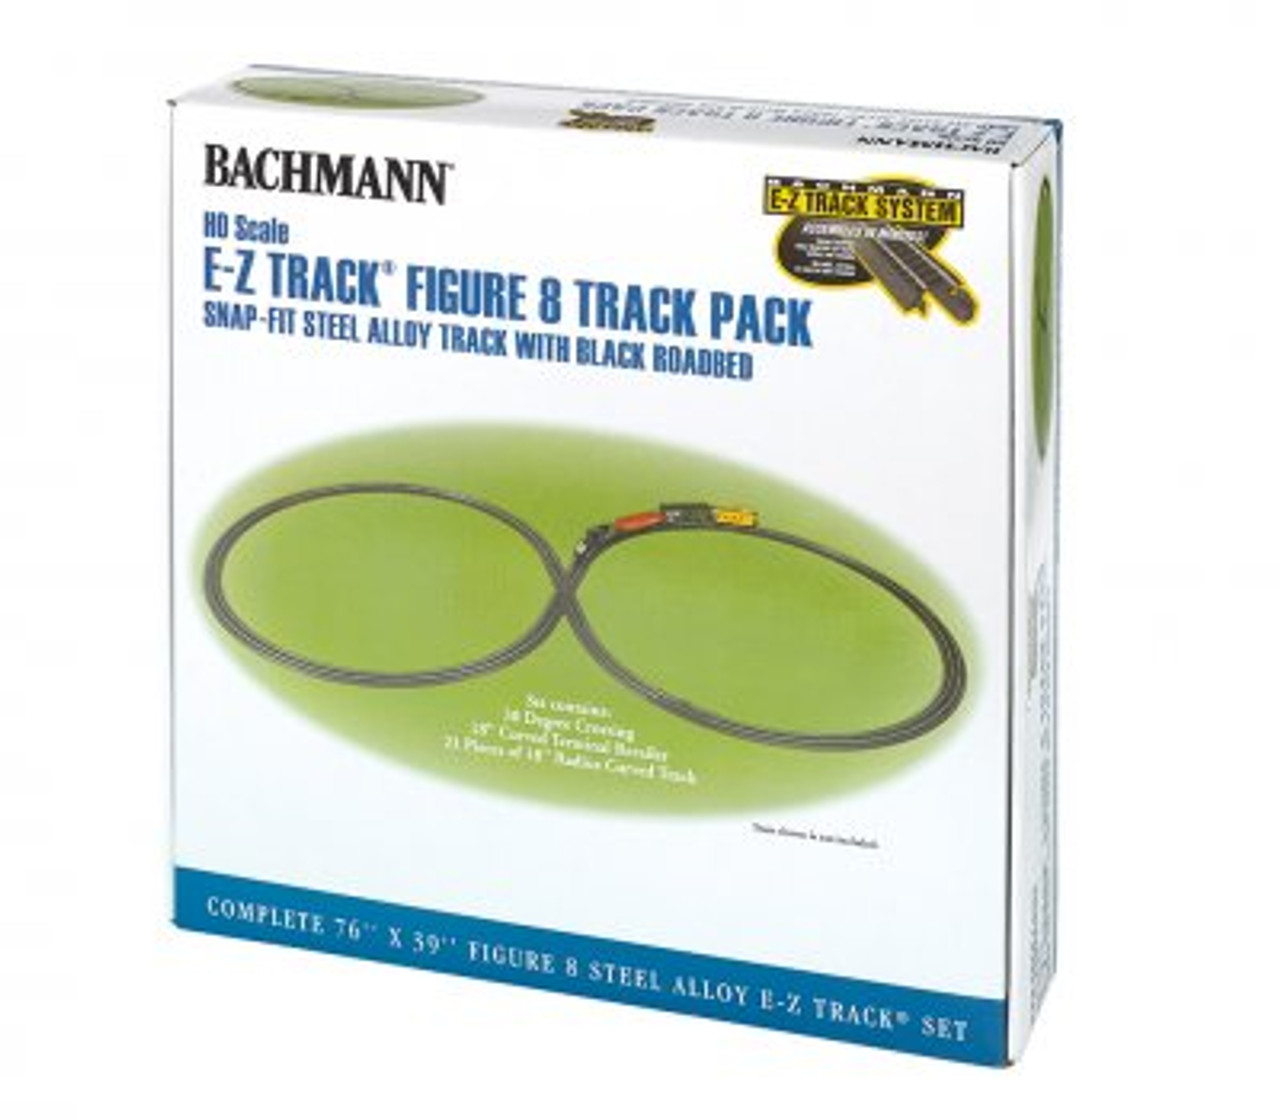 Bachmann 44487 HO E-Z Track Steel Alloy Figures 8 Track Pack